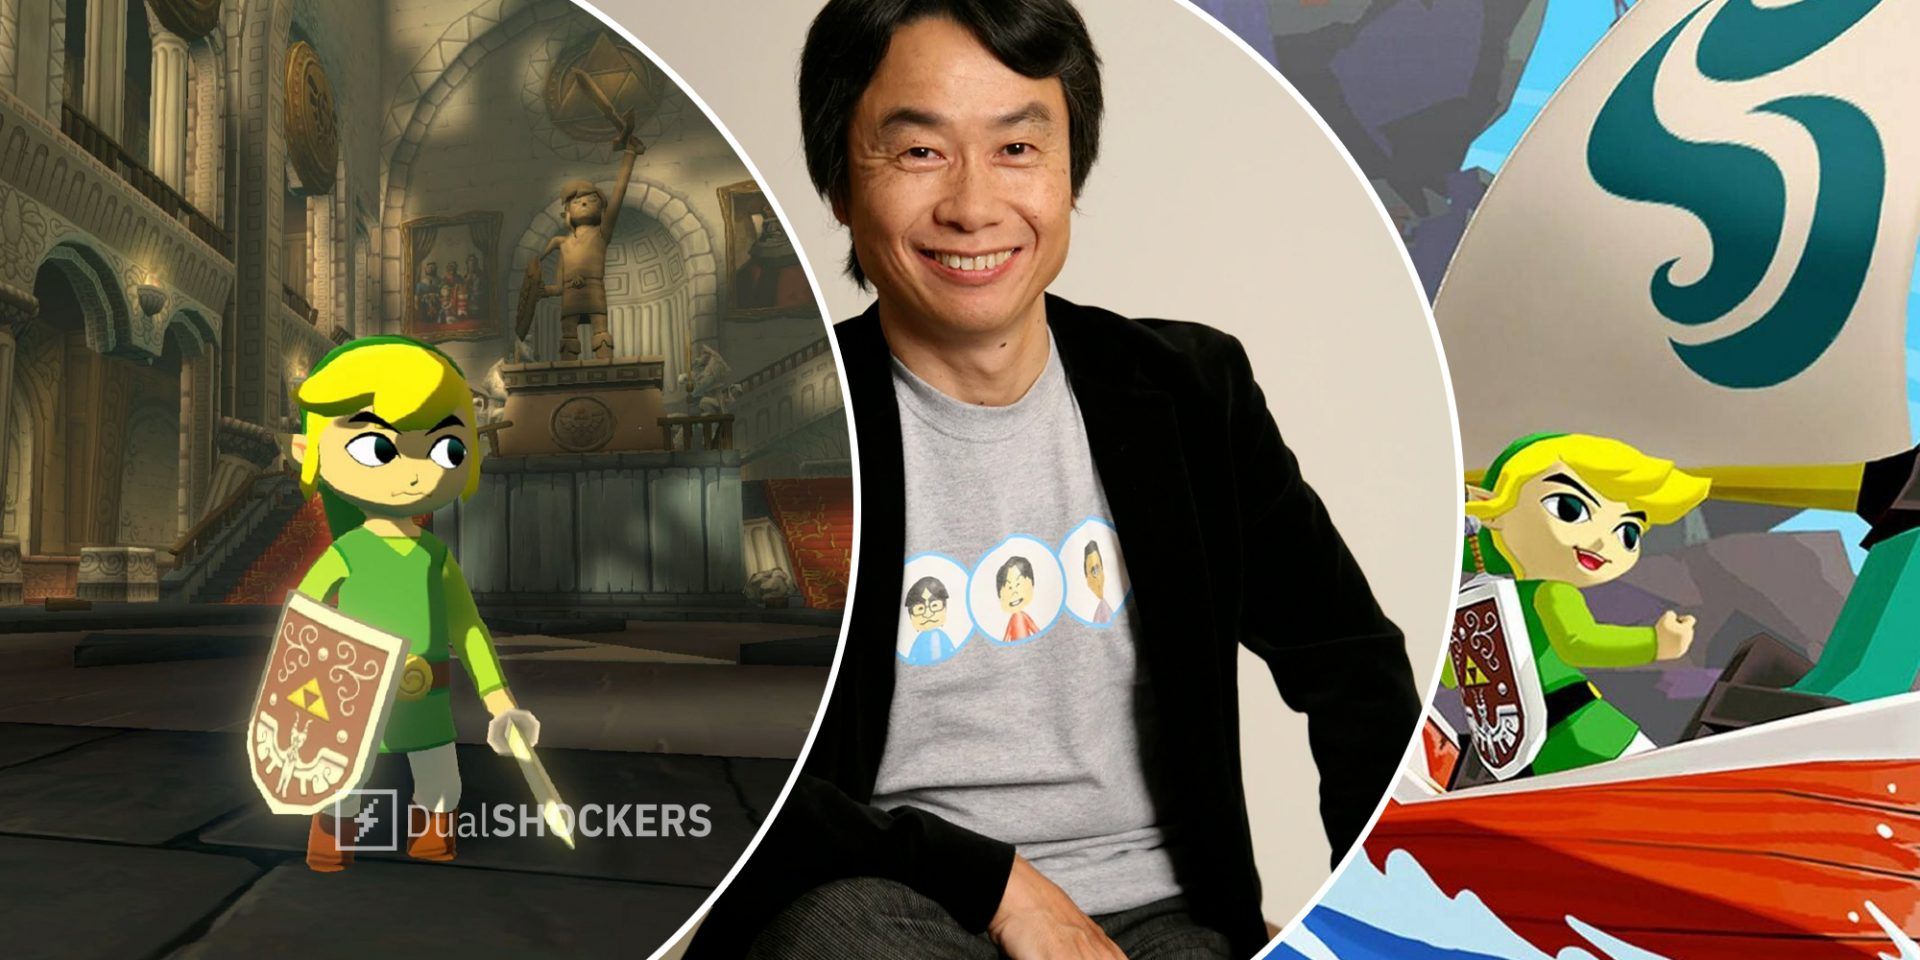 Legend of Zelda the Windwaker on left, Shigeru Miyamoto in middle, Link in ship on right